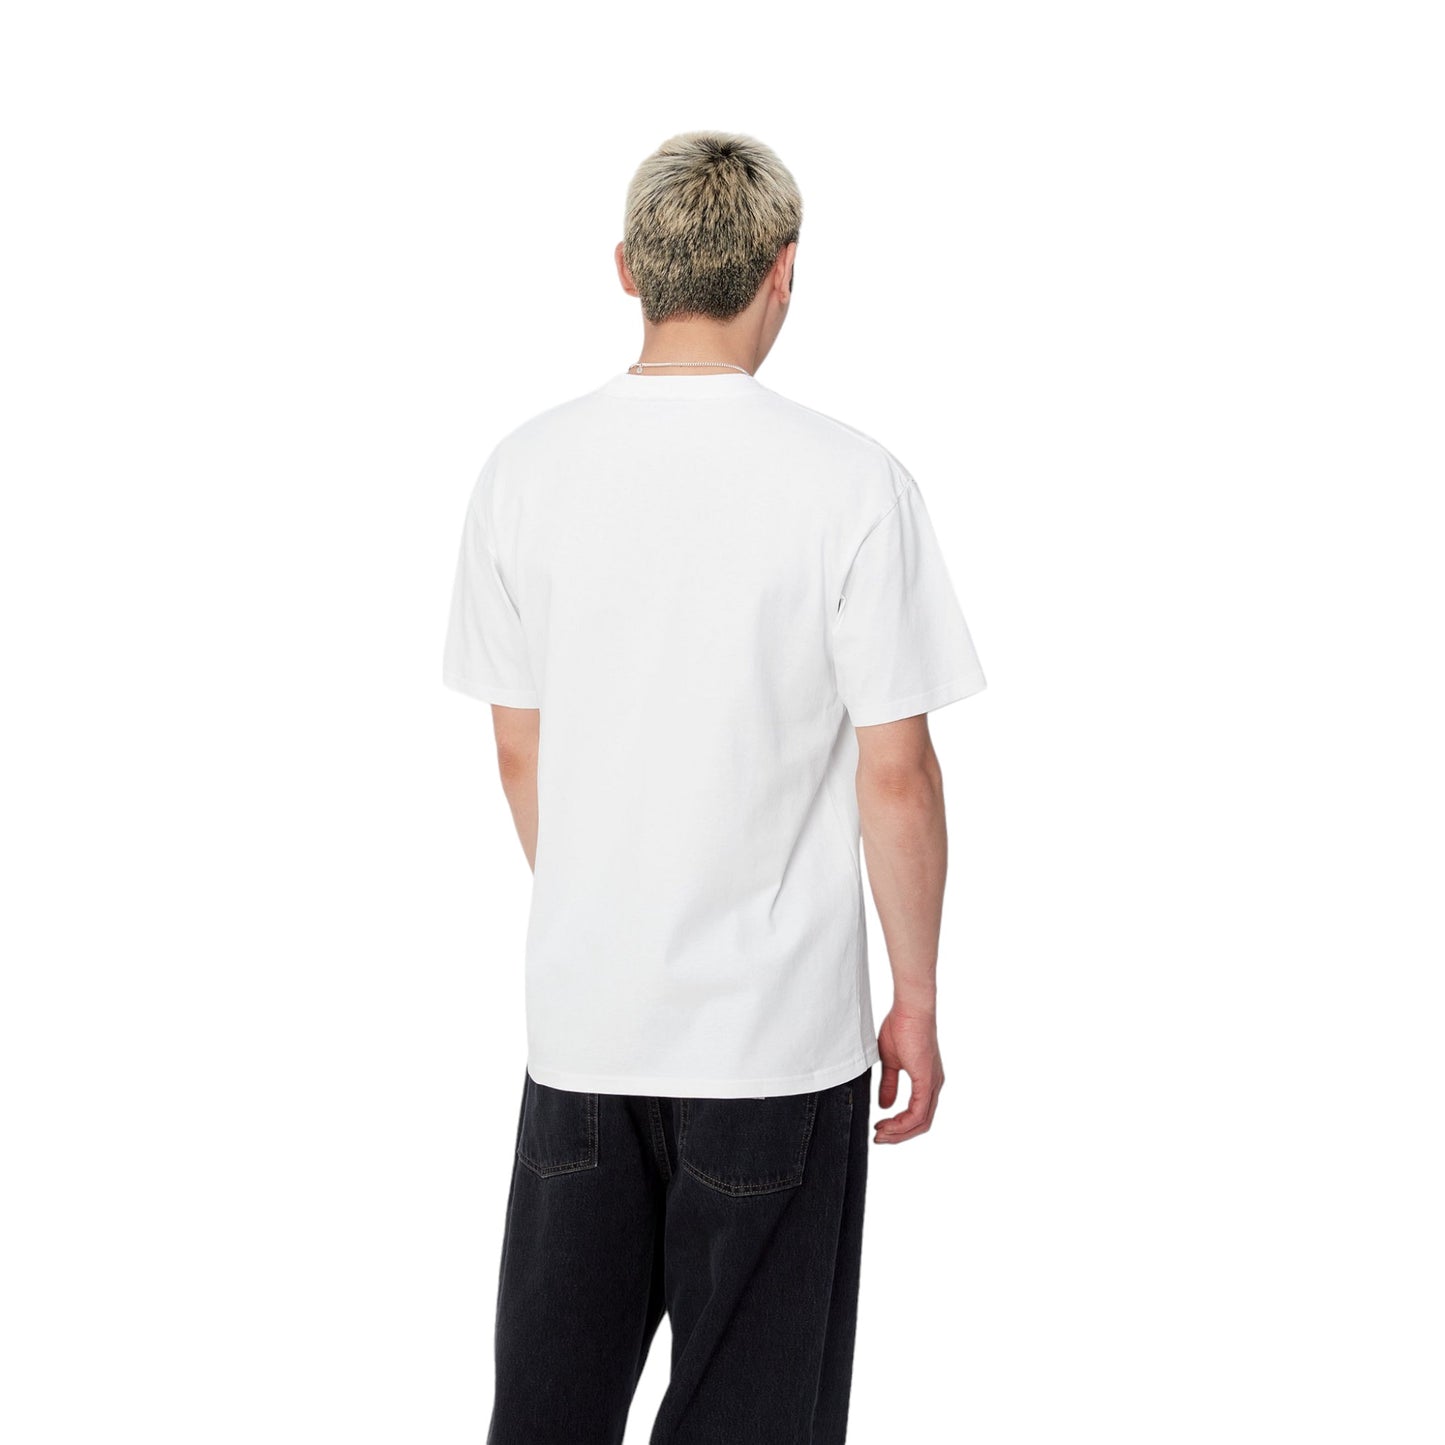 Carhartt Wip S/S Duster Script T-Shirt - White garment dyed